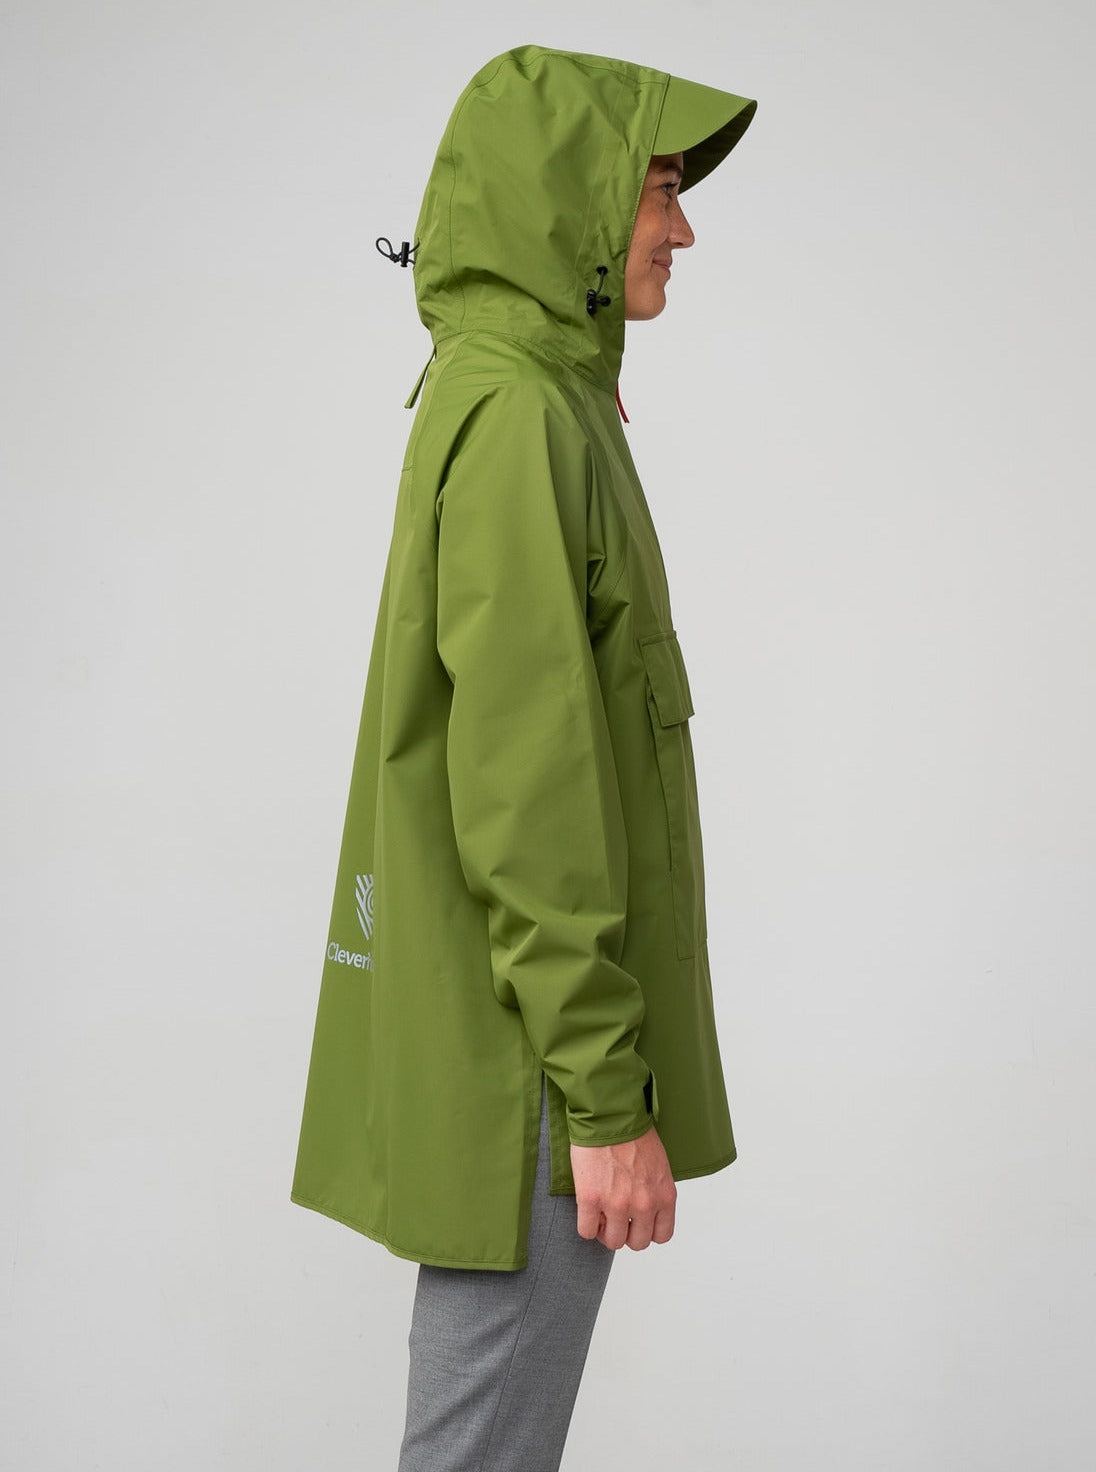 Regenmantel Anorak jetzt | kaufen Jacke